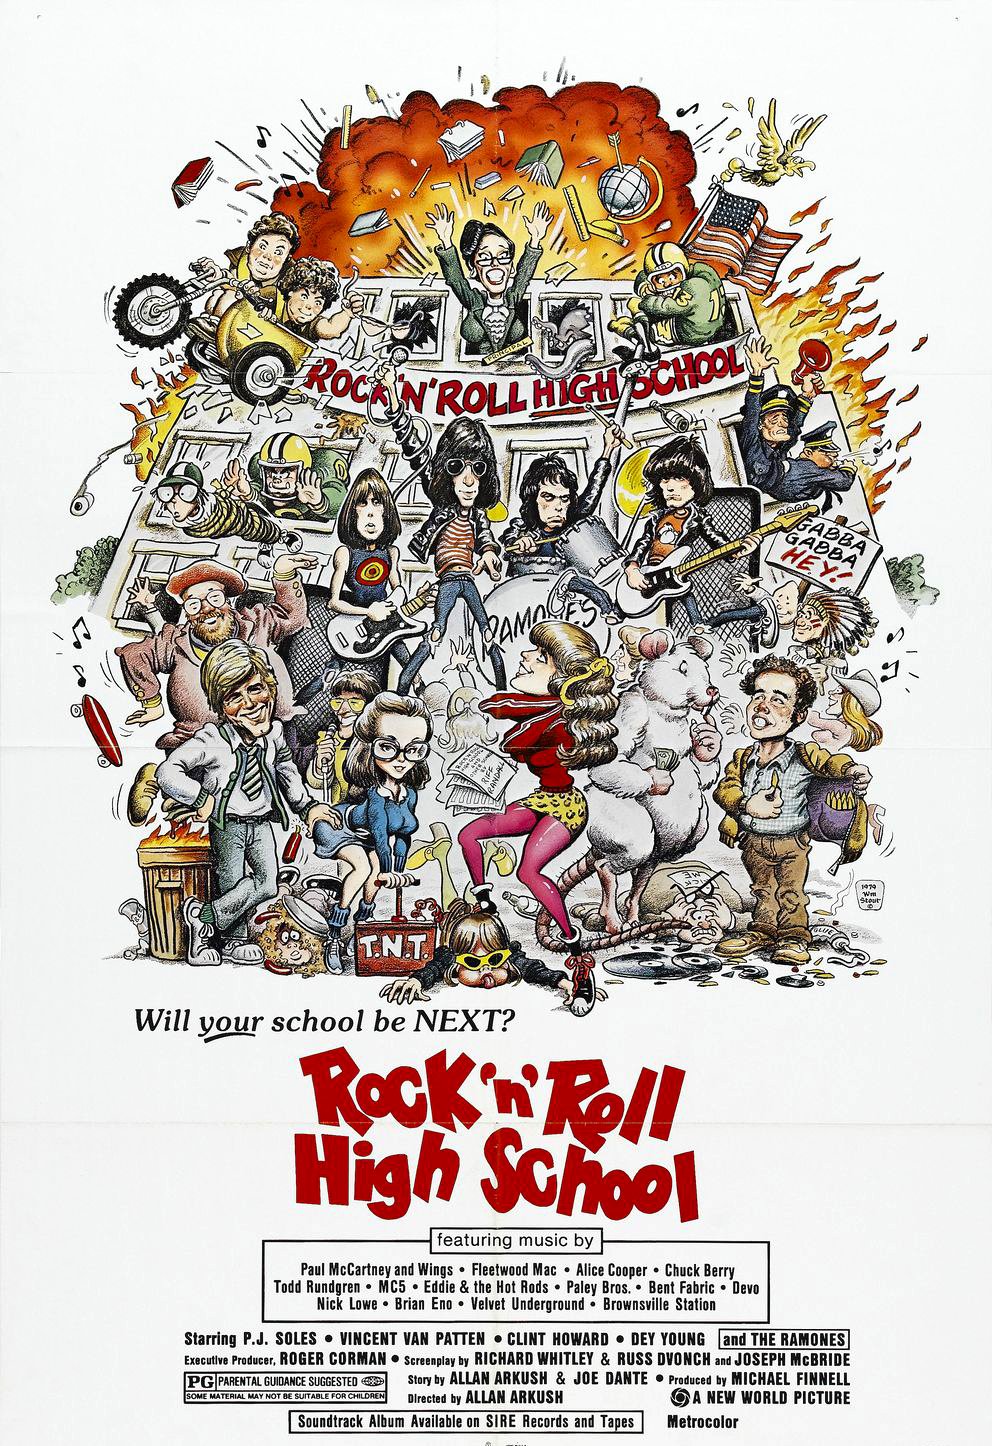 Nonton film Rock n Roll High School layarkaca21 indoxx1 ganool online streaming terbaru